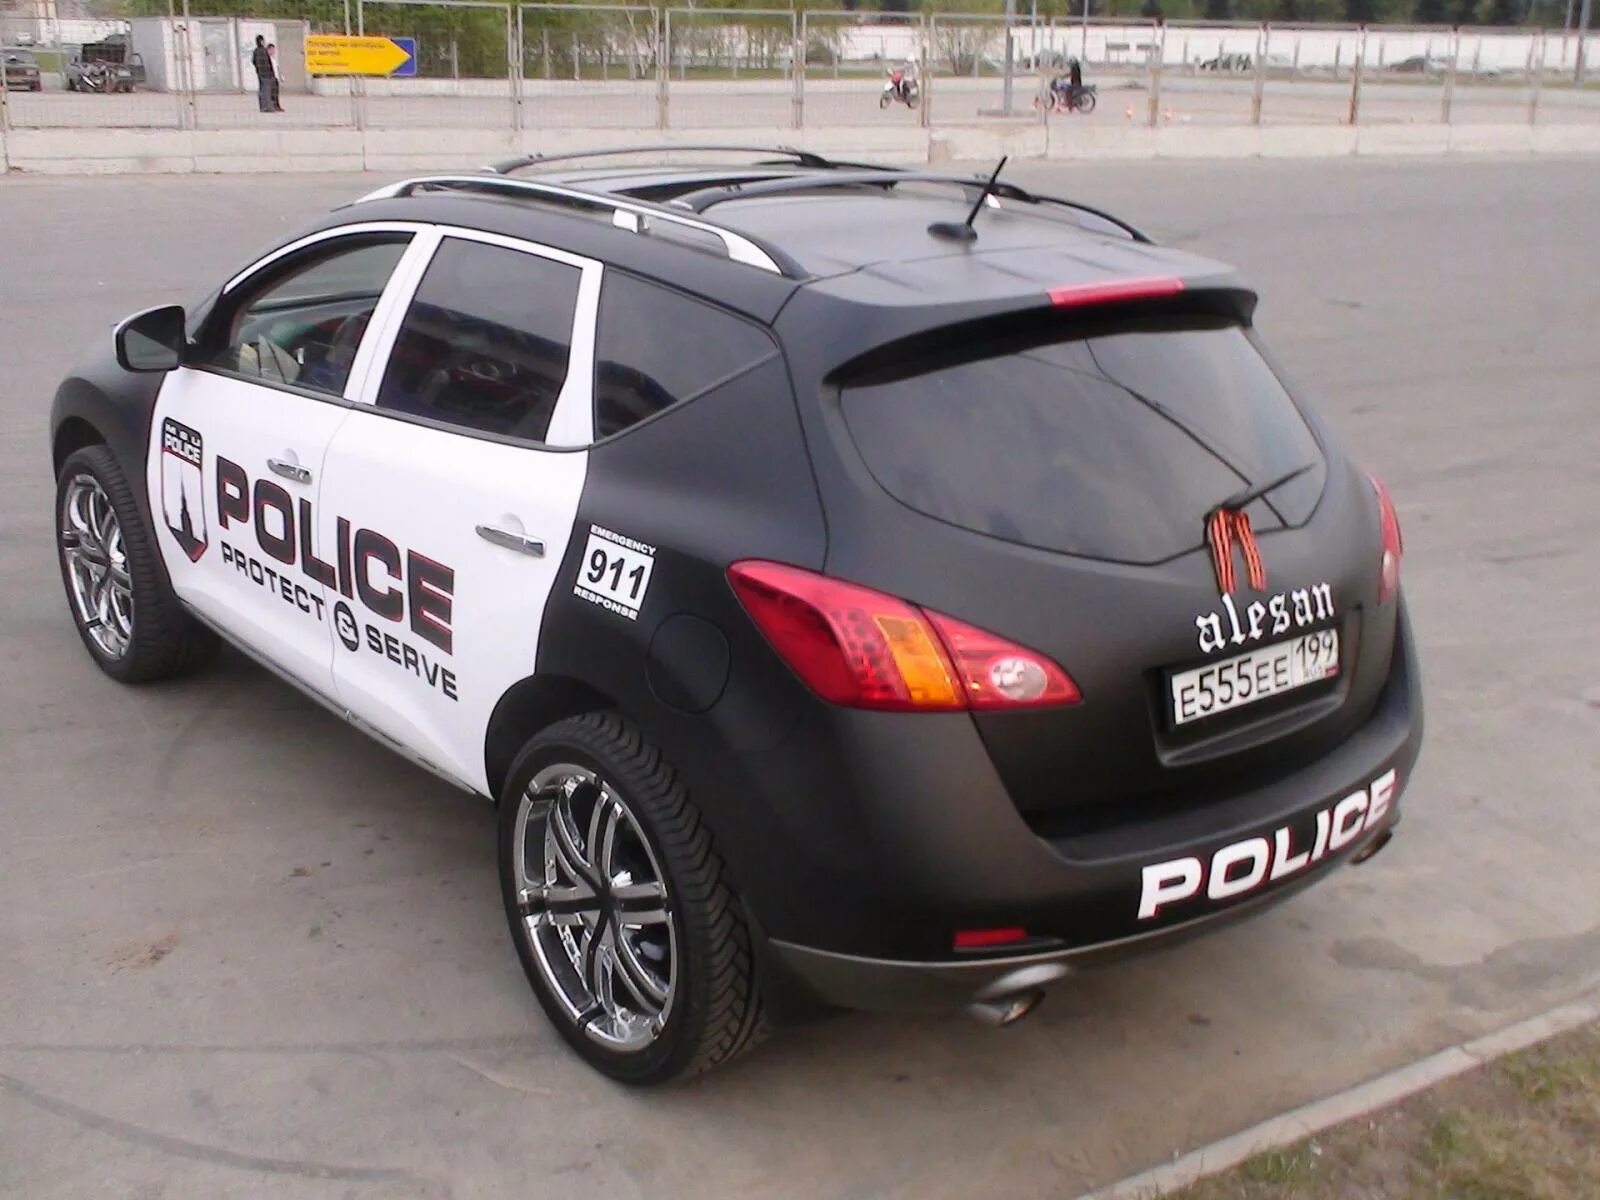 Newauto. Ниссан Мурано полиция. Nissan Murano Police.